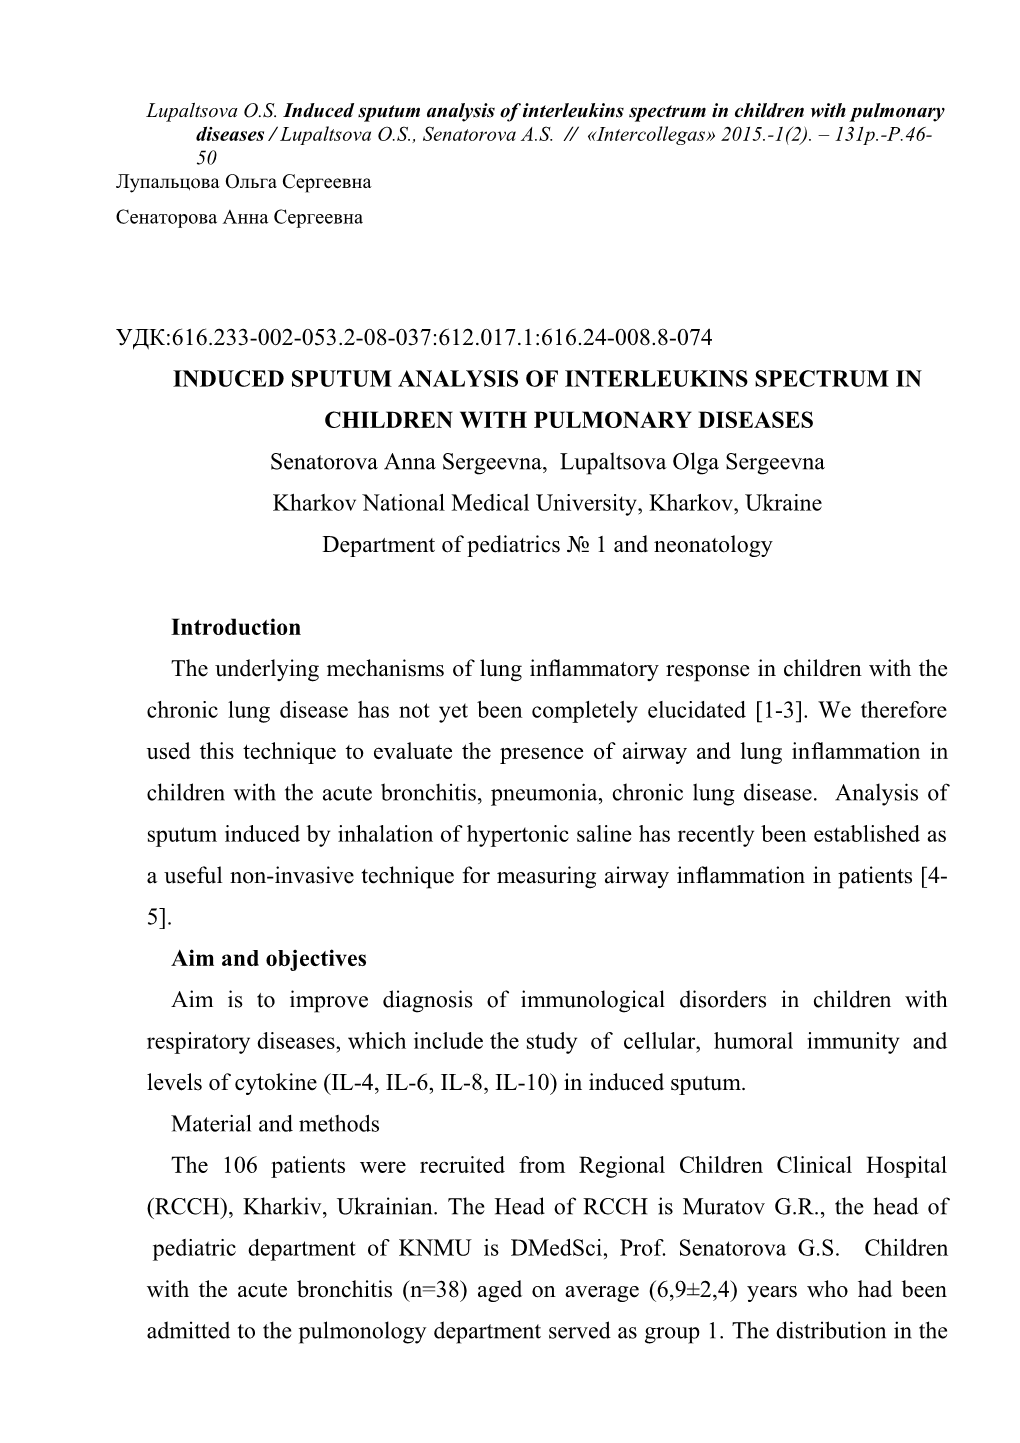 Induced Sputum Analysis of Interleukins Spectrumin Children with Pulmonary Diseases